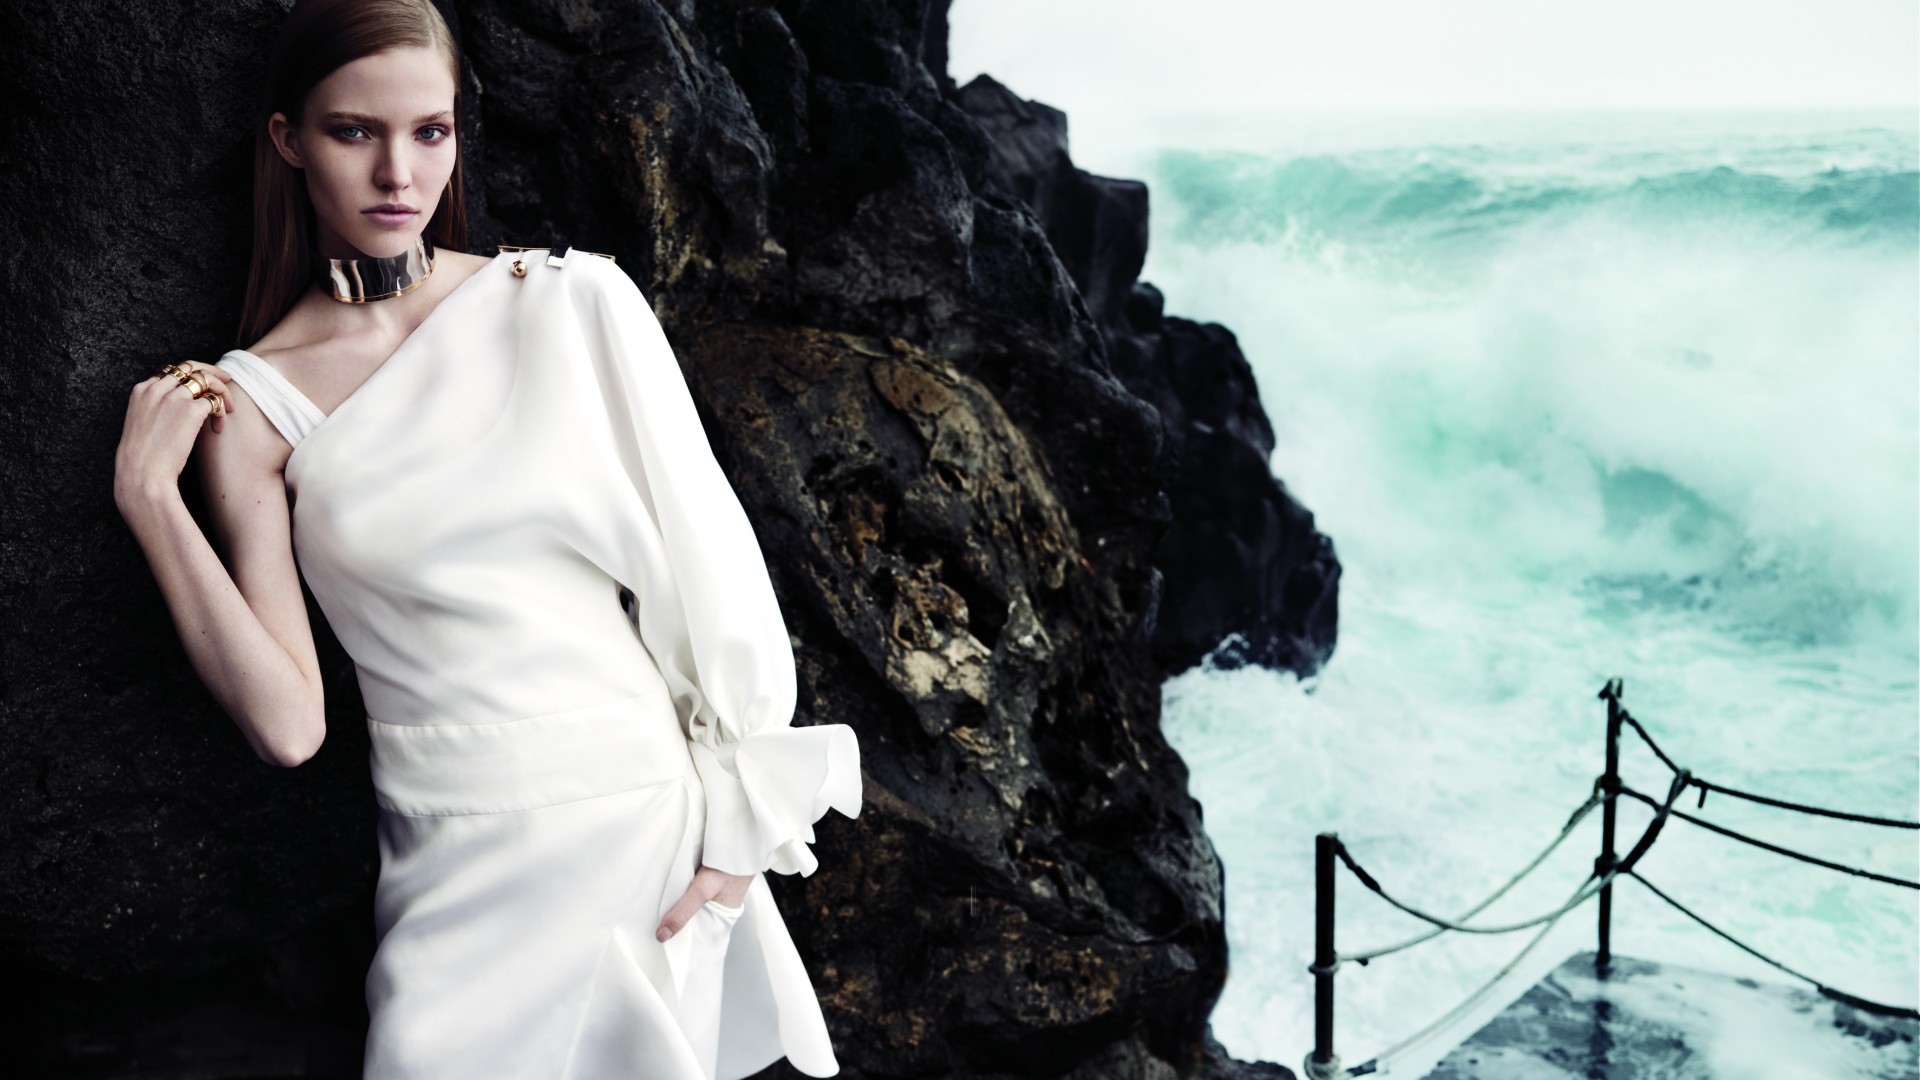 Саша Лусс, Топ модель 2015, модель, пляж, платье, океан, море, Sasha Luss, Top Fashion Models 2015, model, beach, white dress, sea, ocean,  (horizontal)